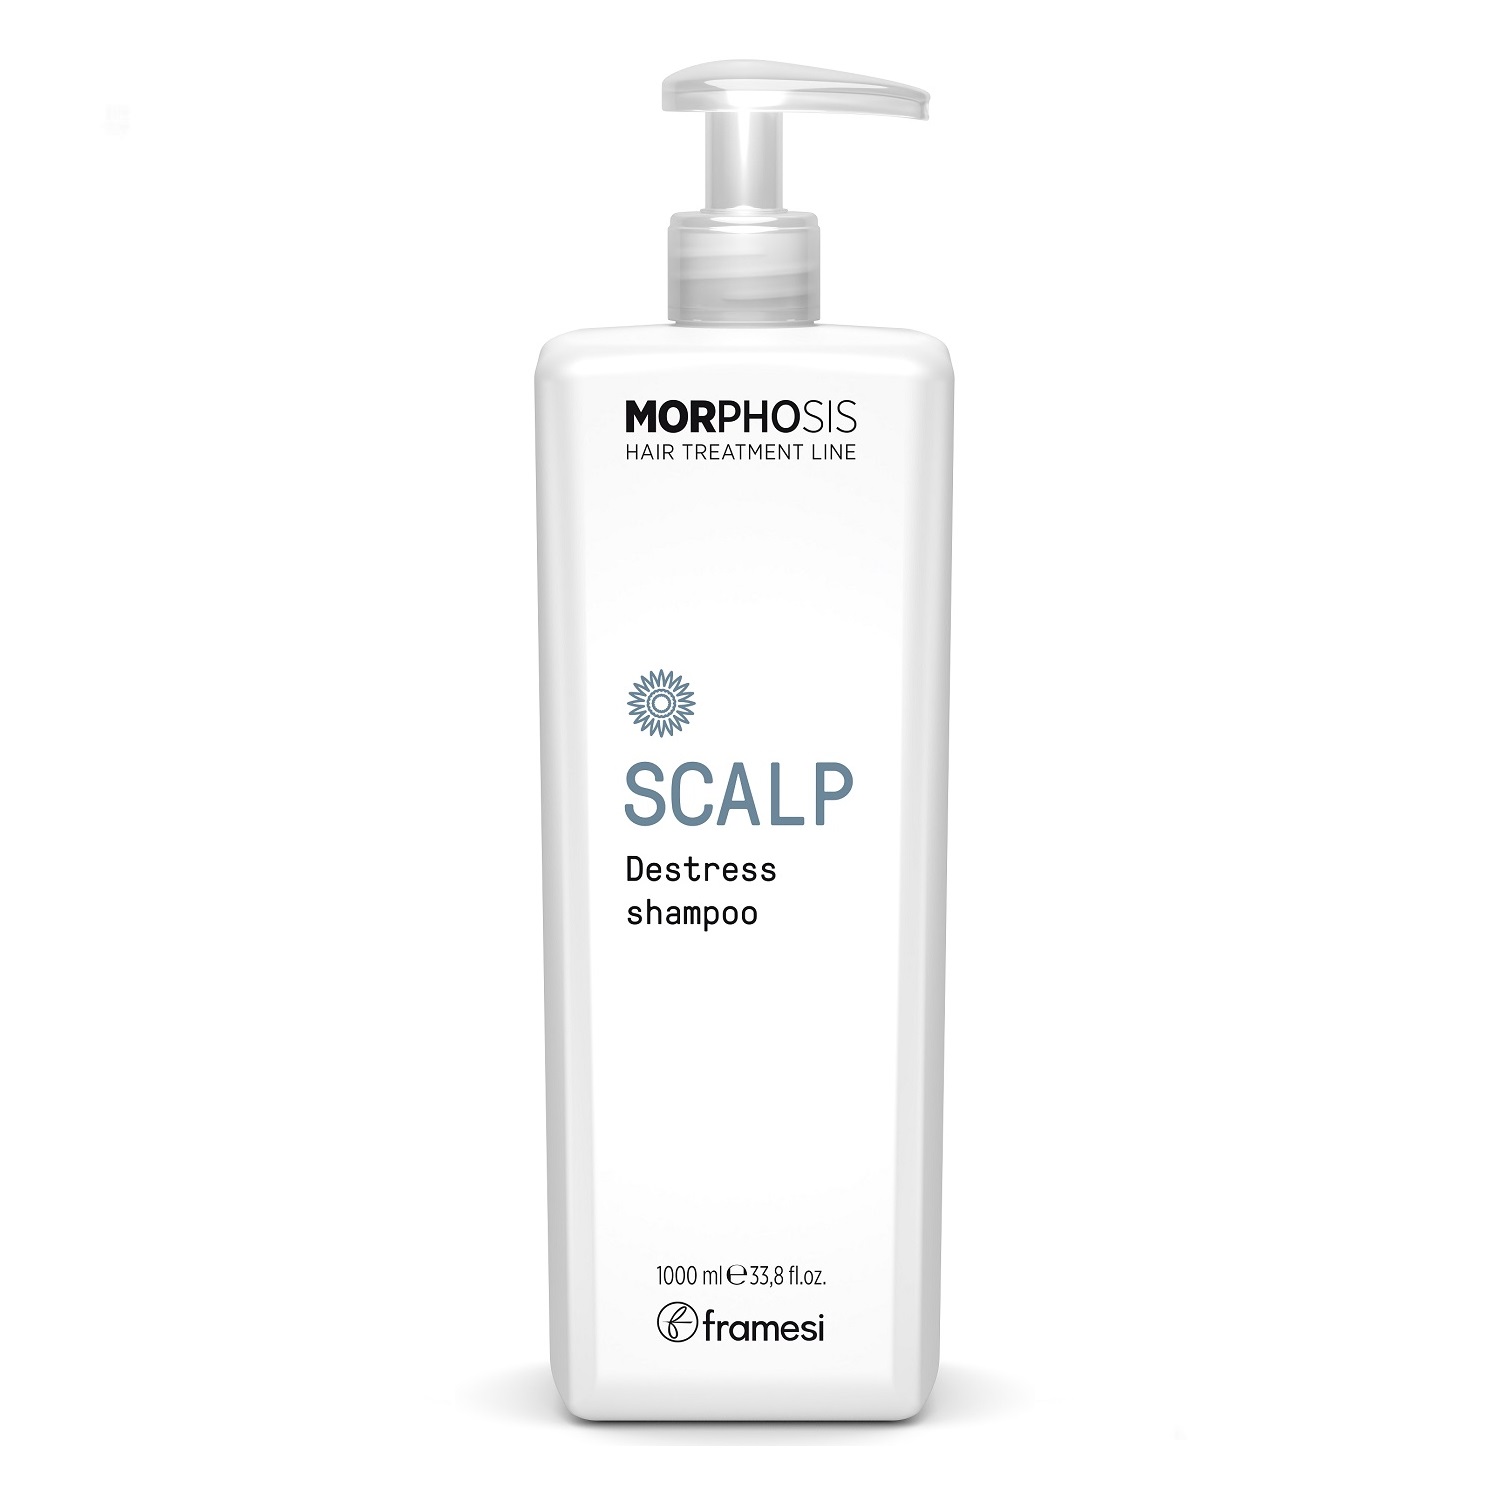 FRAMESI Шампунь для чувствительной кожи головы Scalp Destress Shampoo, 1000 мл (FRAMESI, Morphosis) framesi morphosis scalp detox эссенция детокс для кожи головы 150 мл